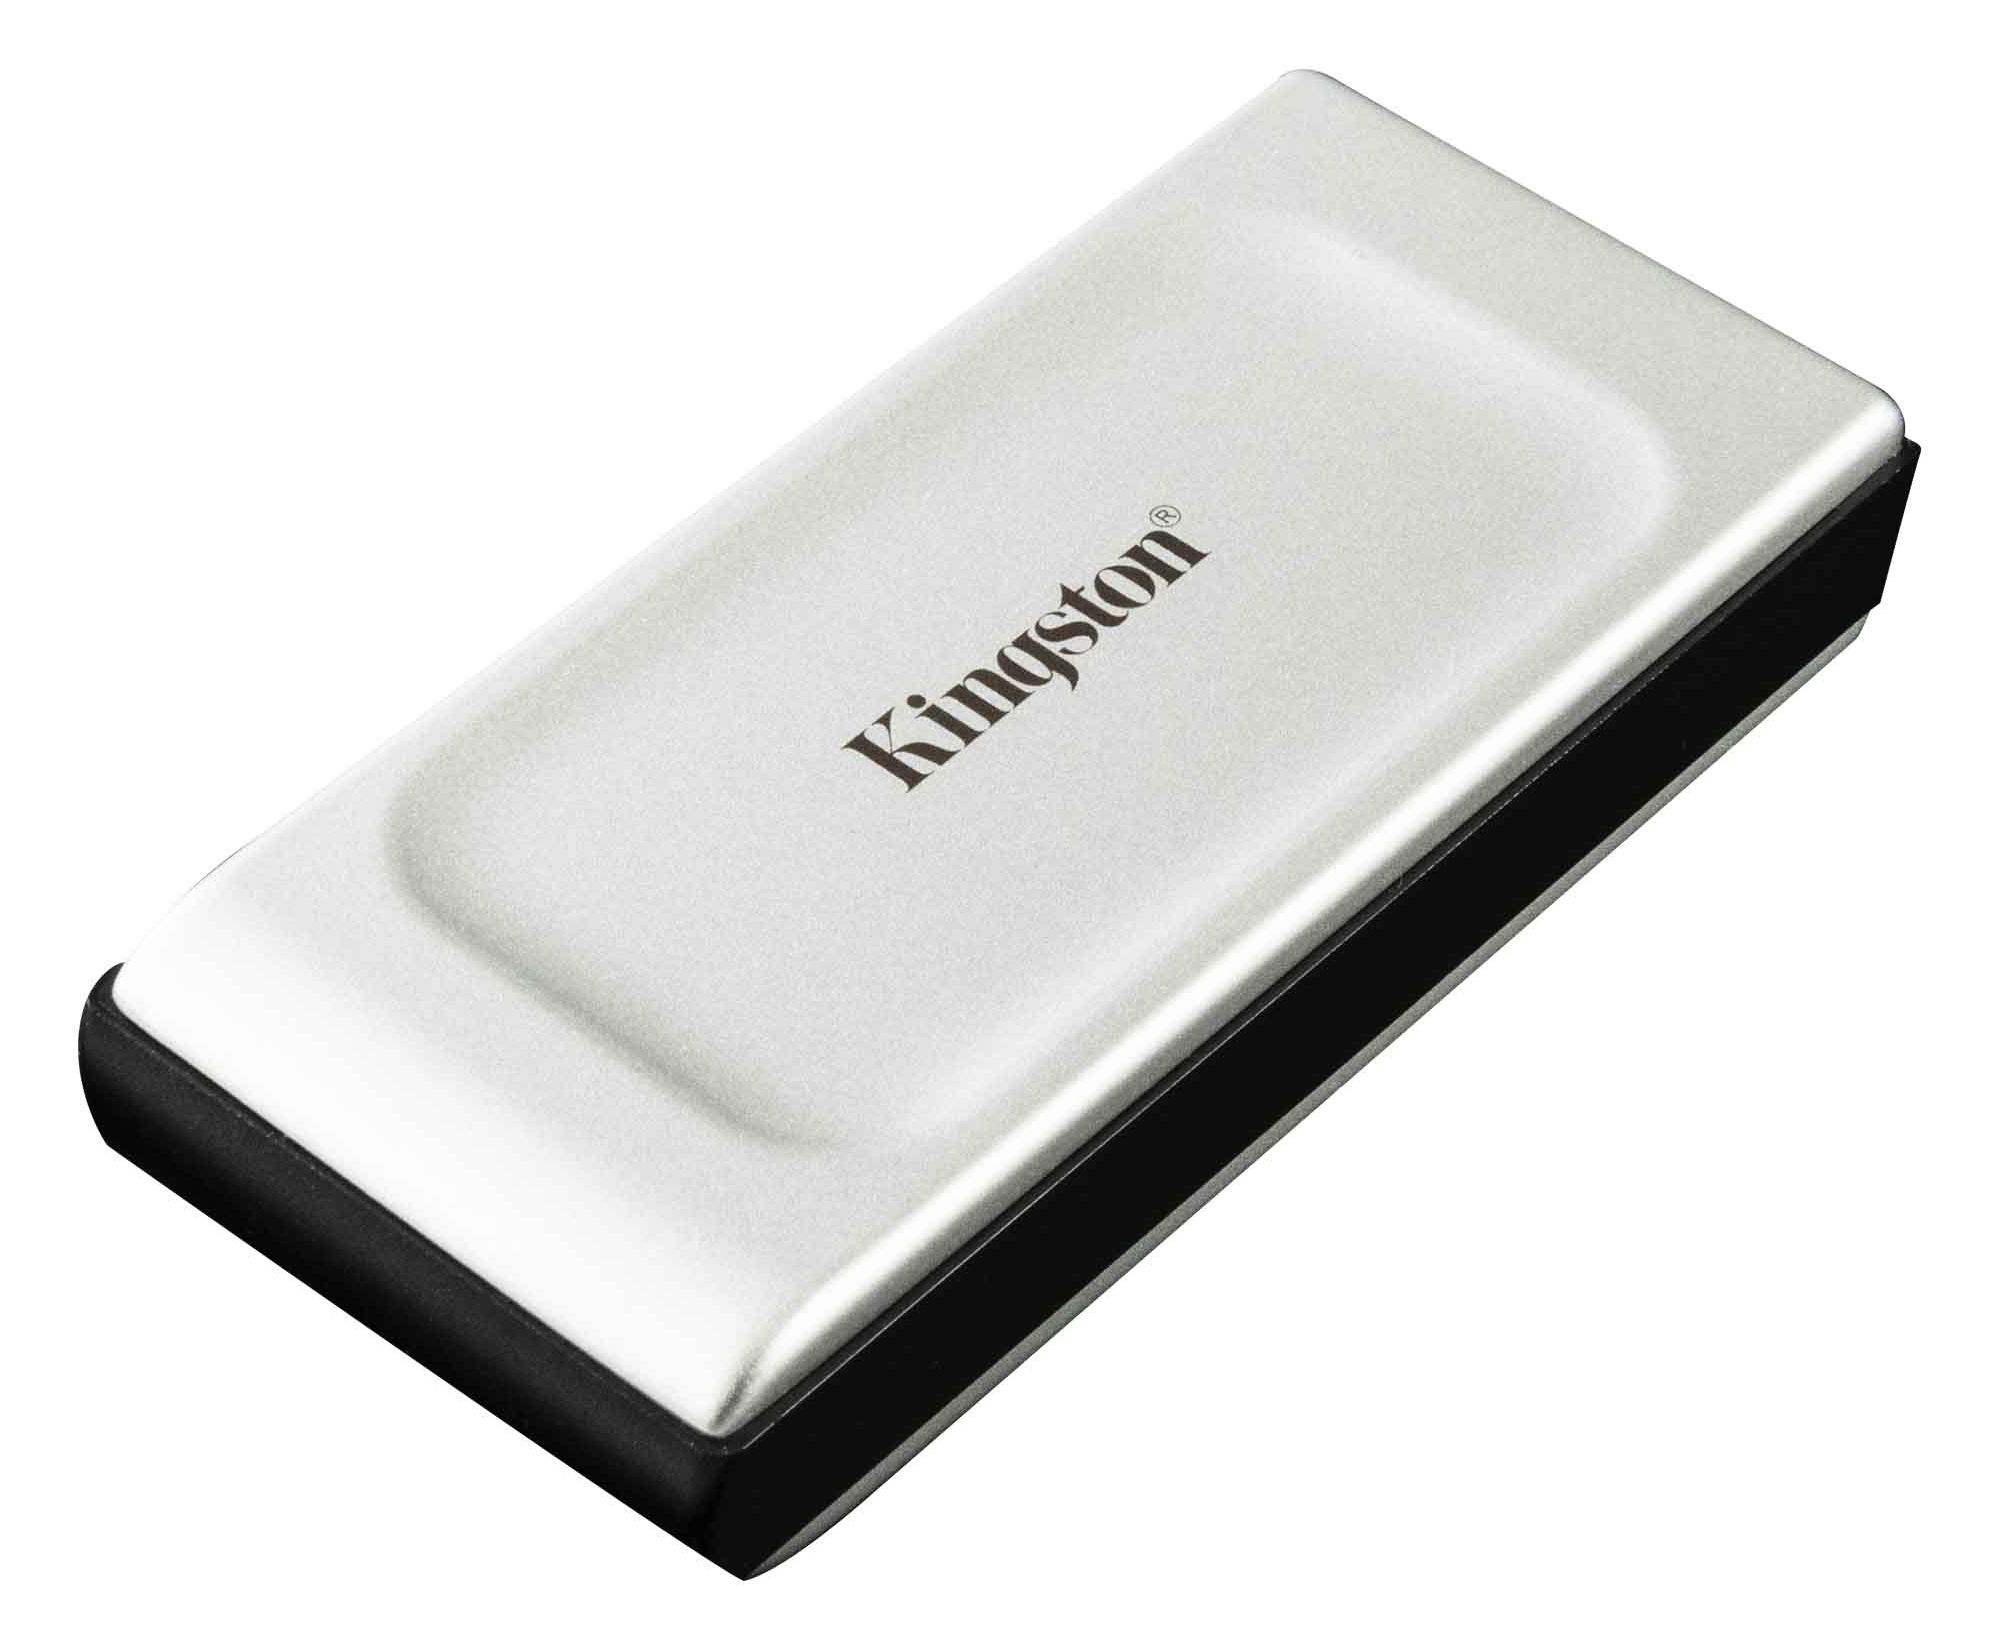 Kingston XS200 USB SSD - Best high-capacity portable SSD